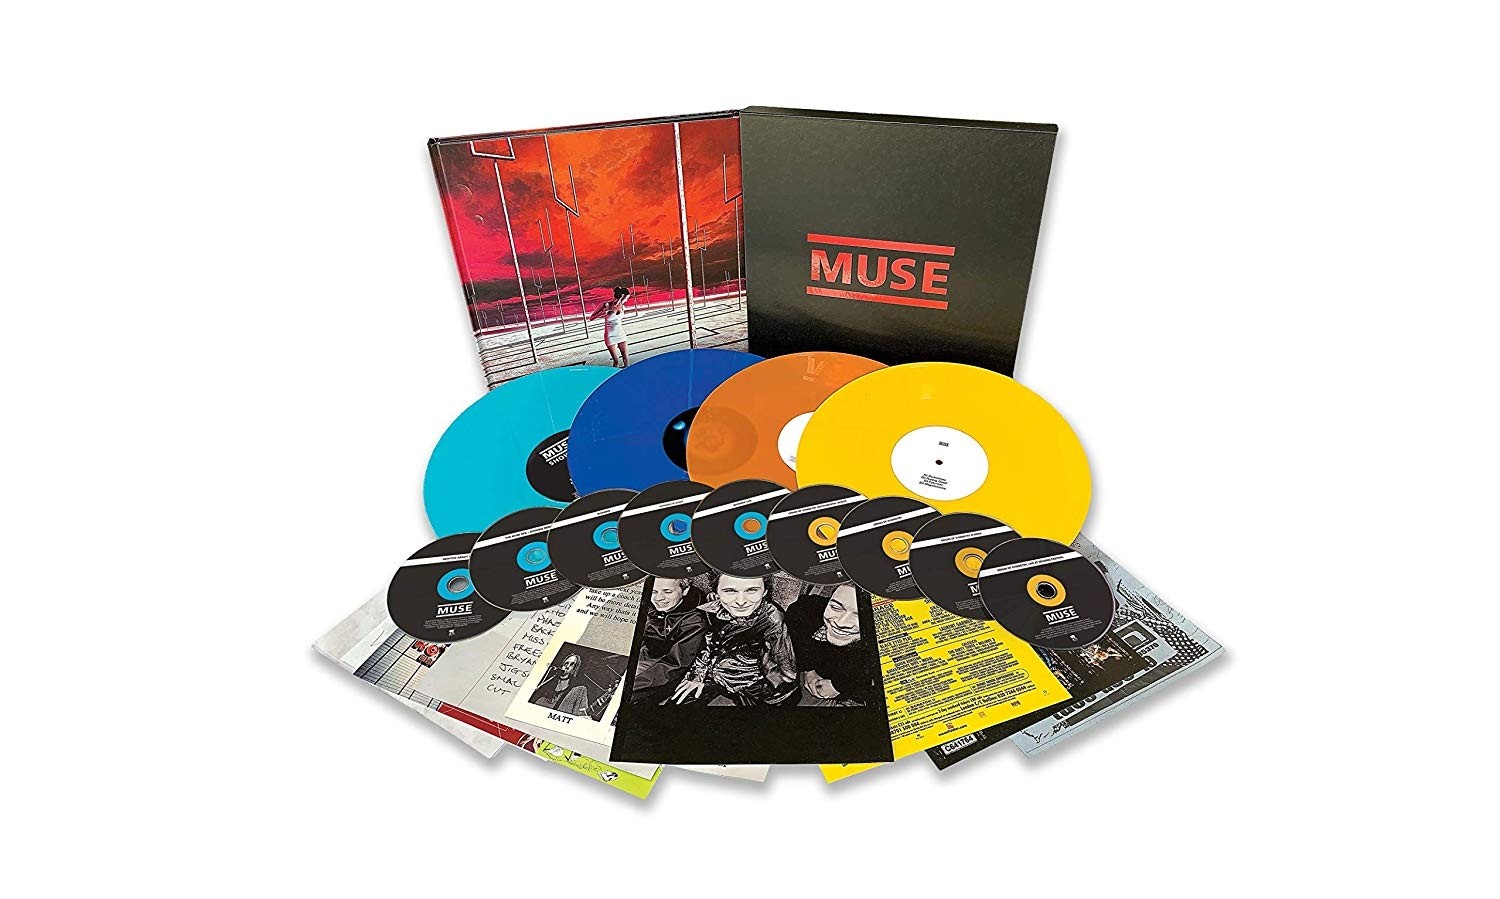 Buy Muse - Origins Of Muse Vinyl Boxset at SRCVinyl. Limited edition vinyl and CD boxset. 